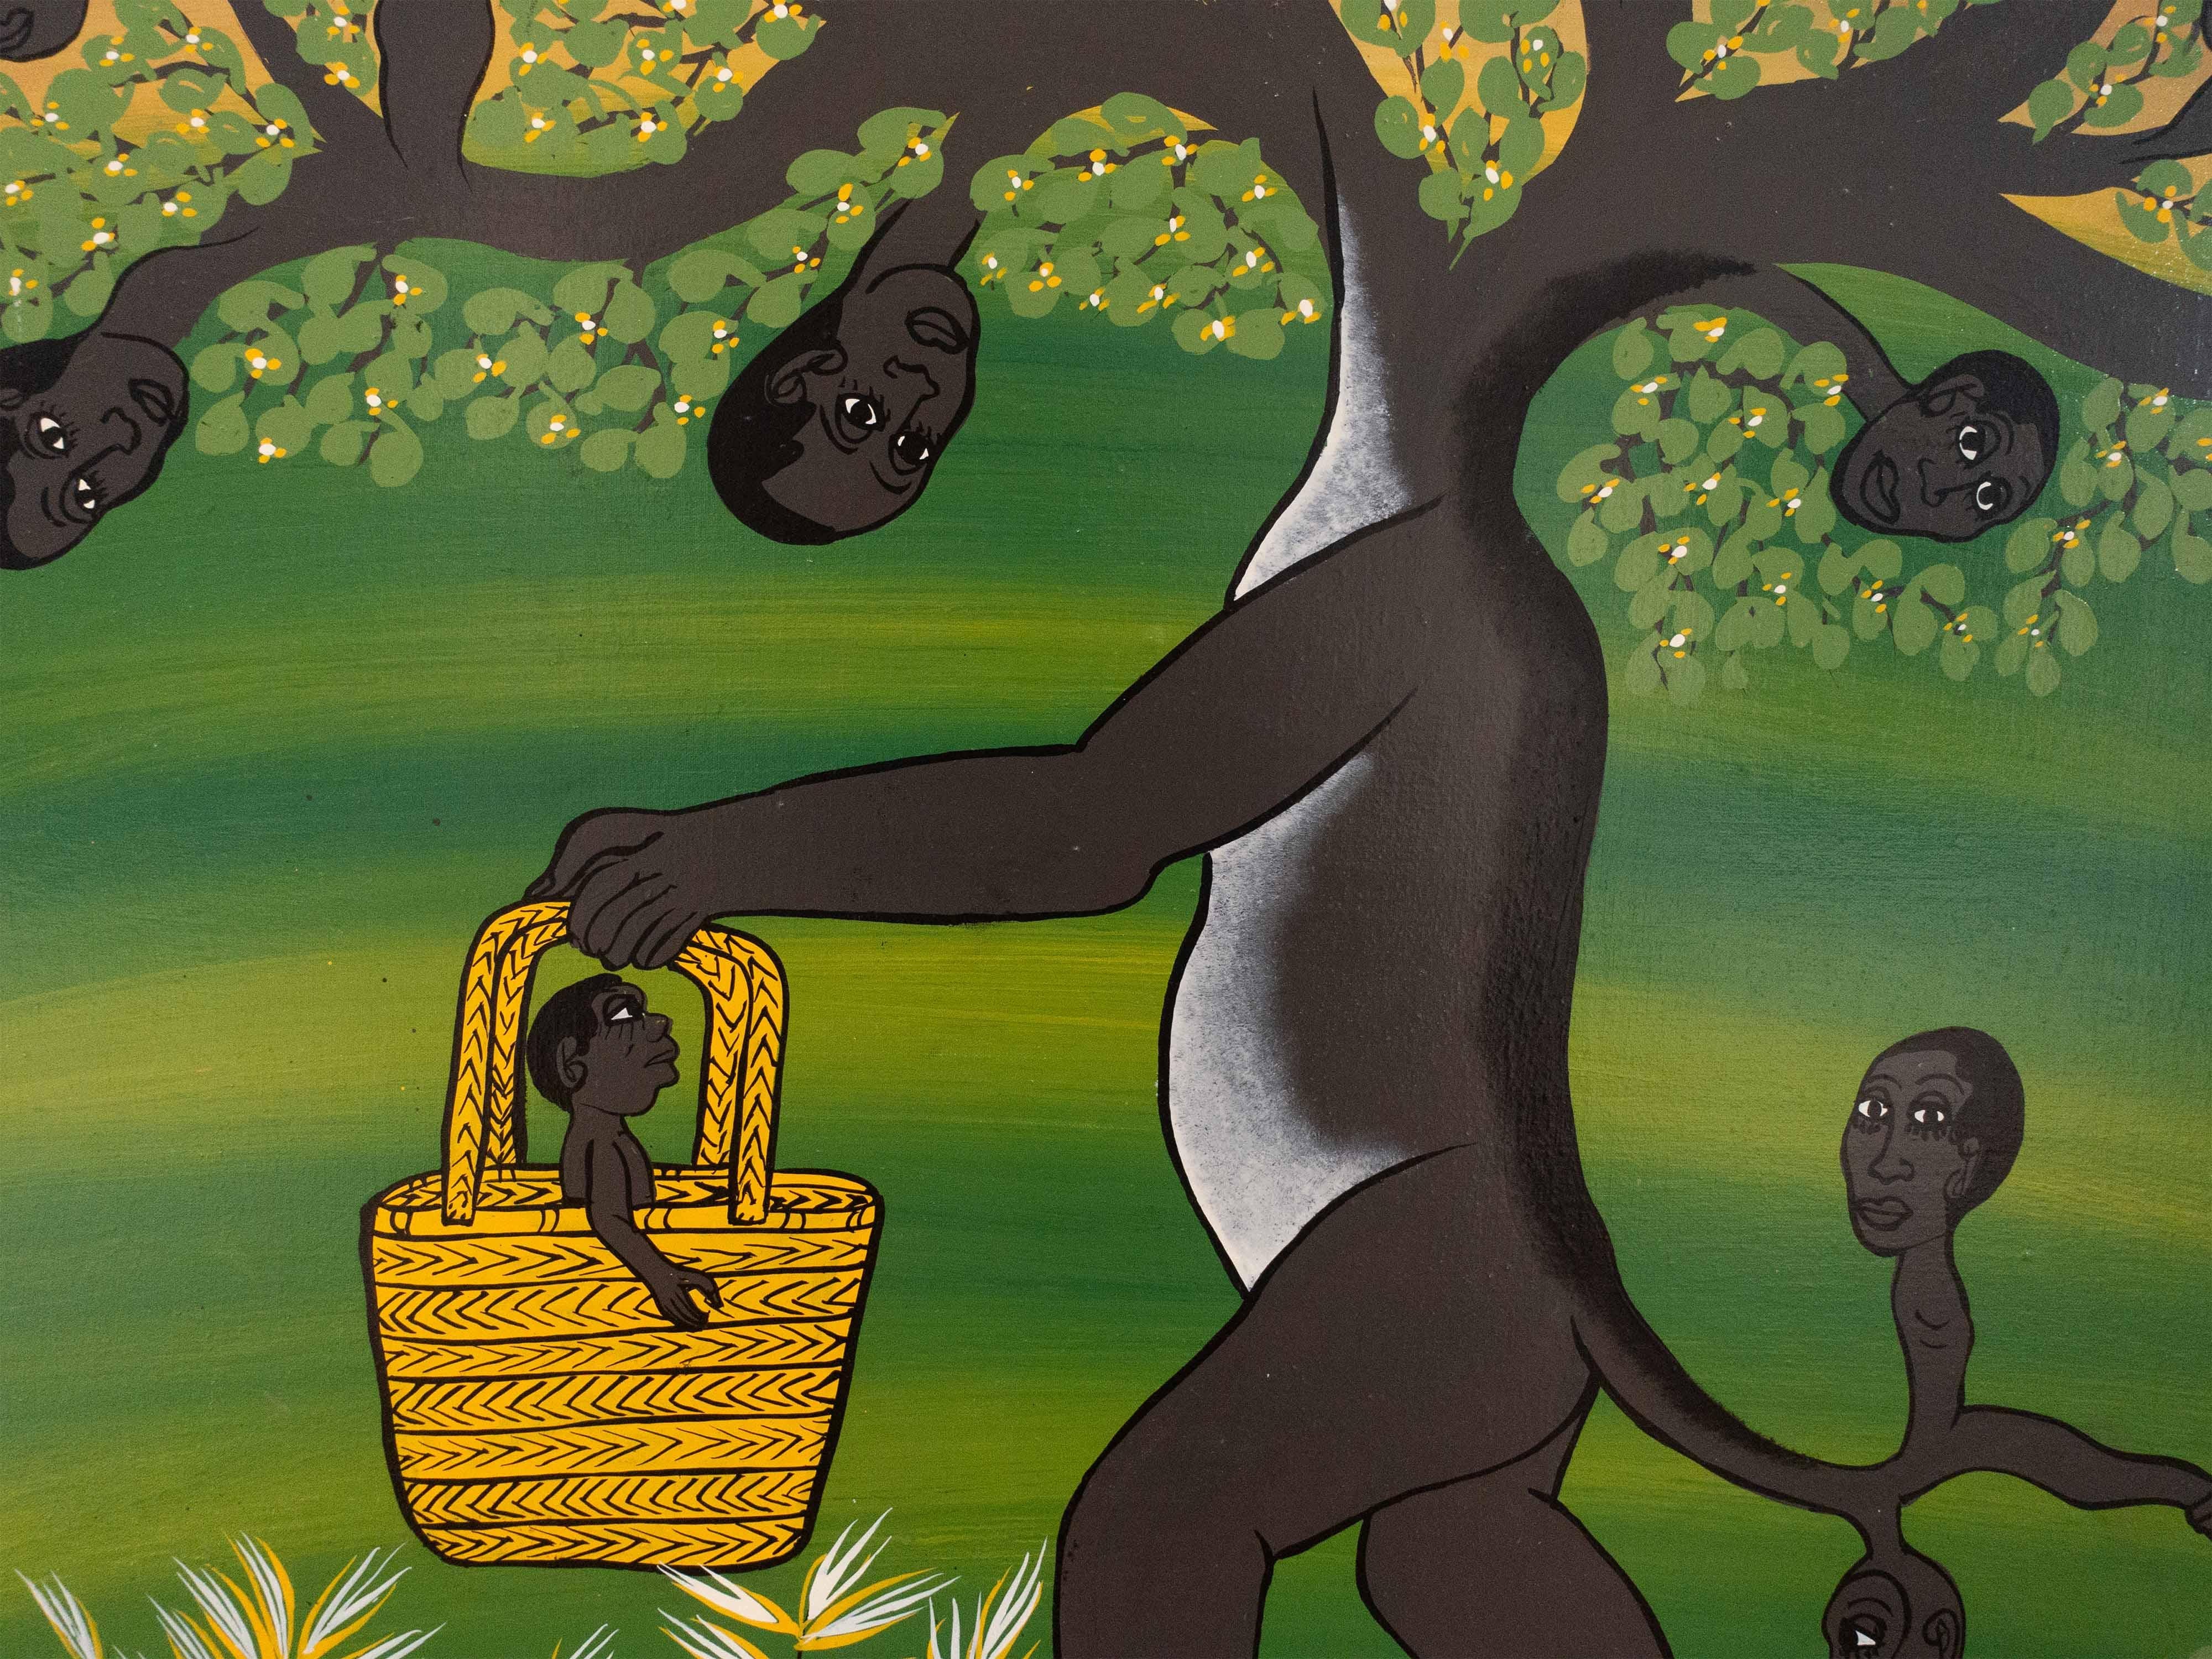 Untitled, Tinga tinga, African art, Figurative art, Surrealism - Painting by Mohamed Wasia Charinda